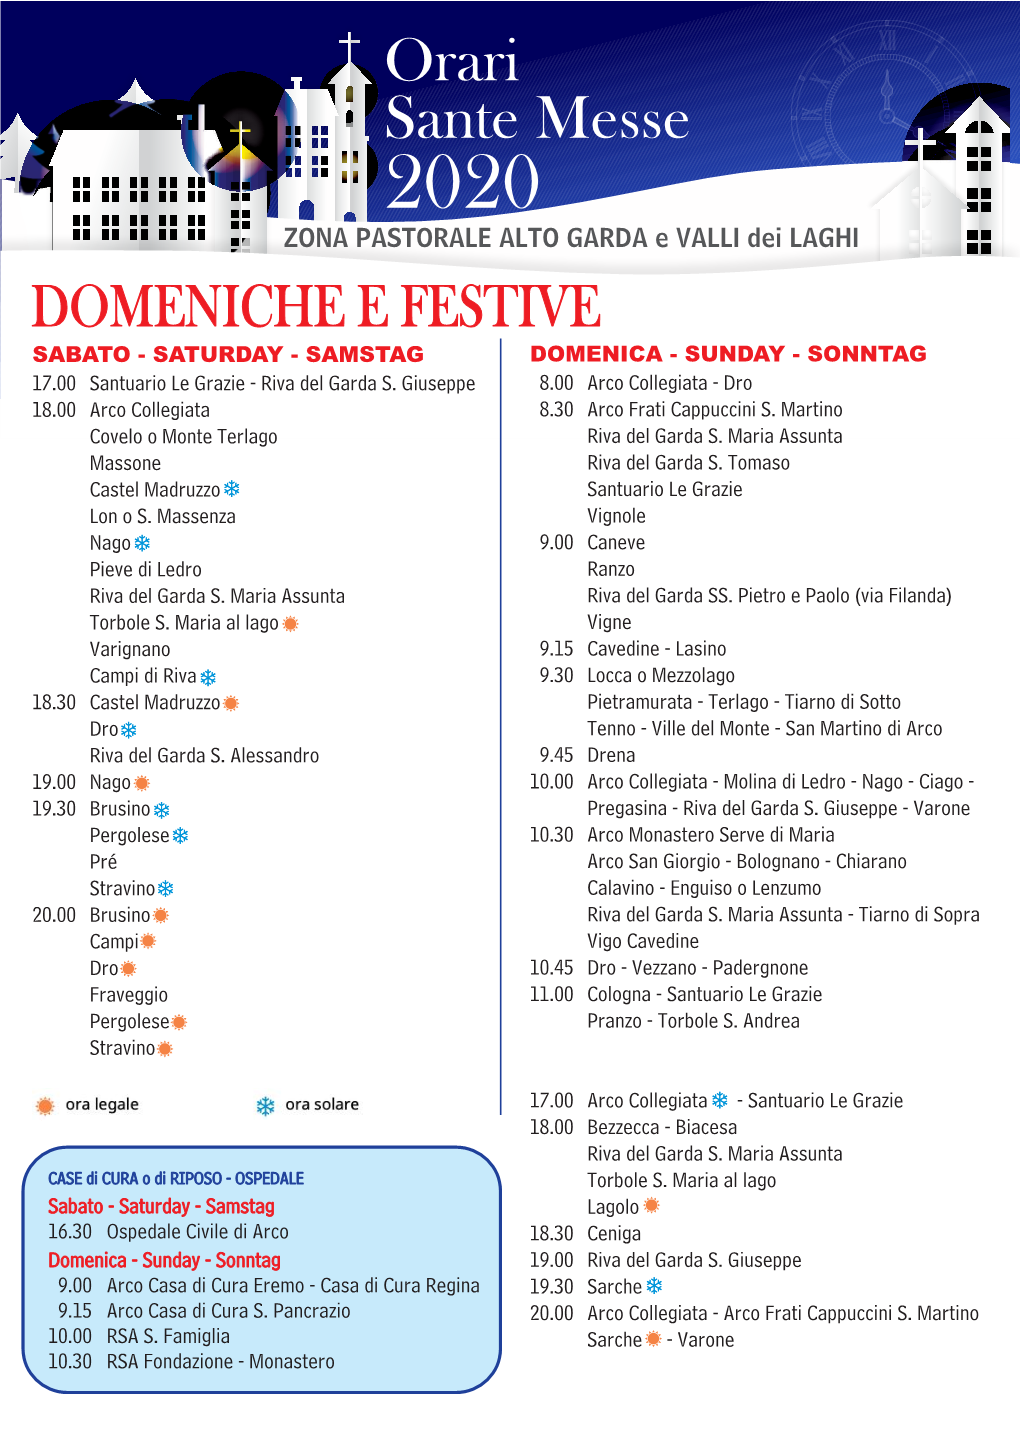 Orari Messe Locandina 2020.Cdr